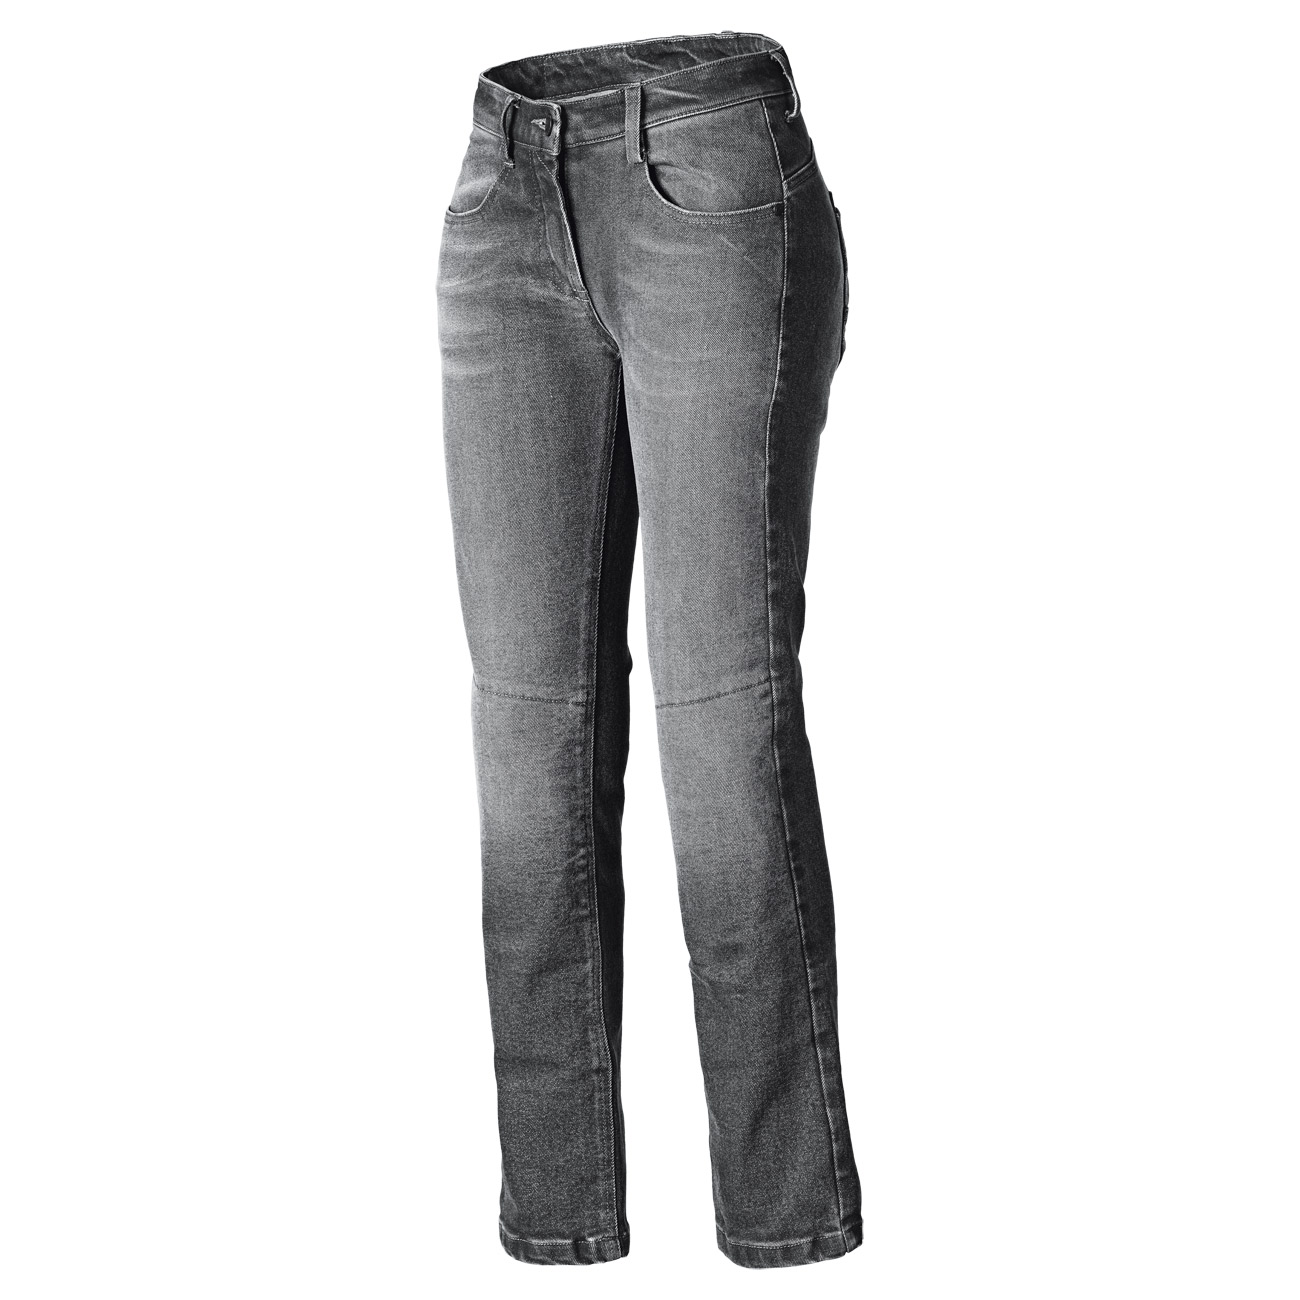 Marlow WMS Ladies Biker jeans